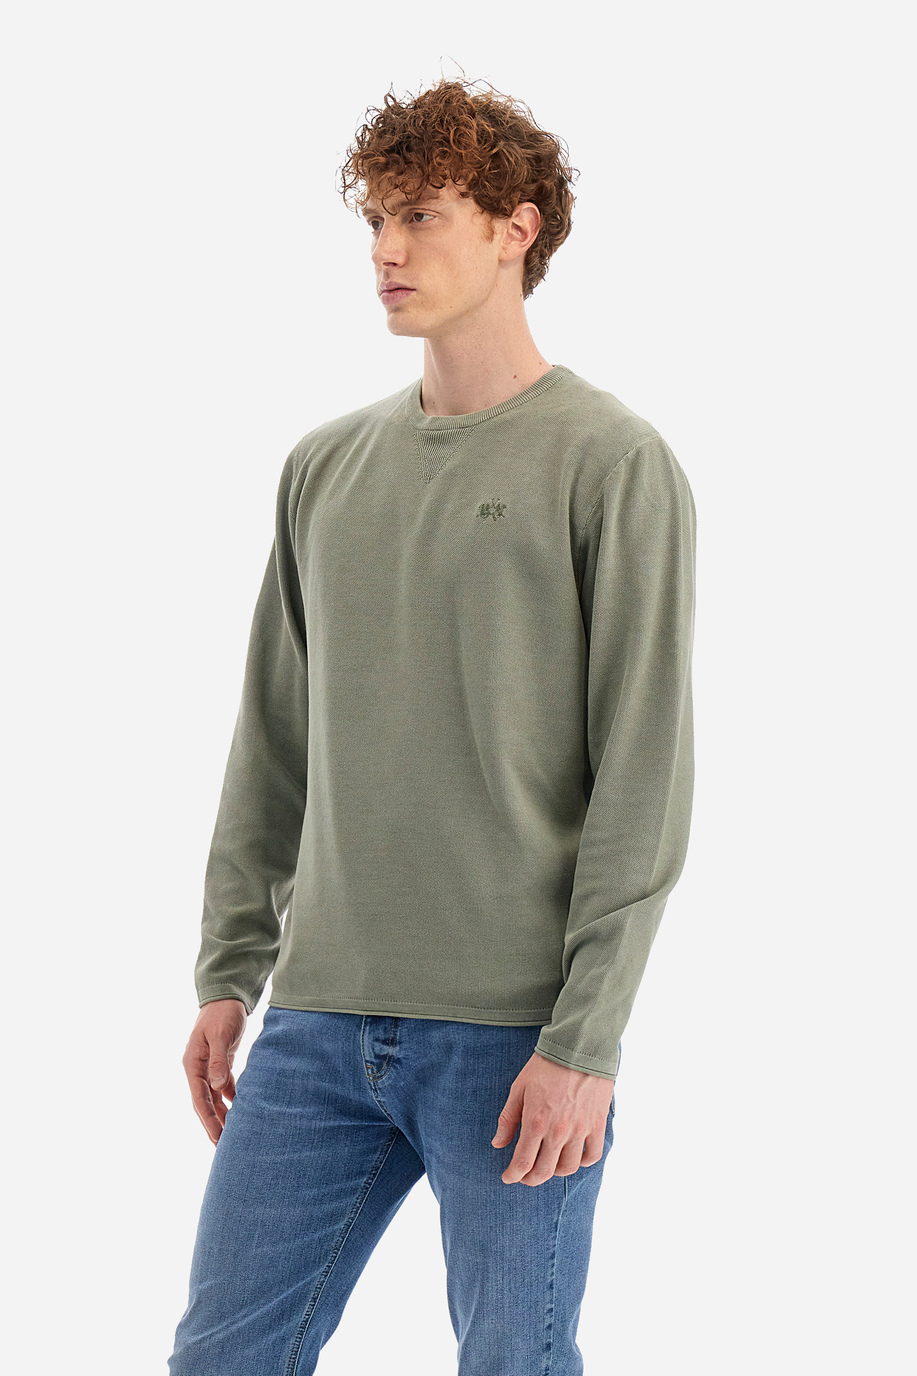 Sweater de algodón de corte recto - Ysmal - Jerséis | La Martina - Official Online Shop